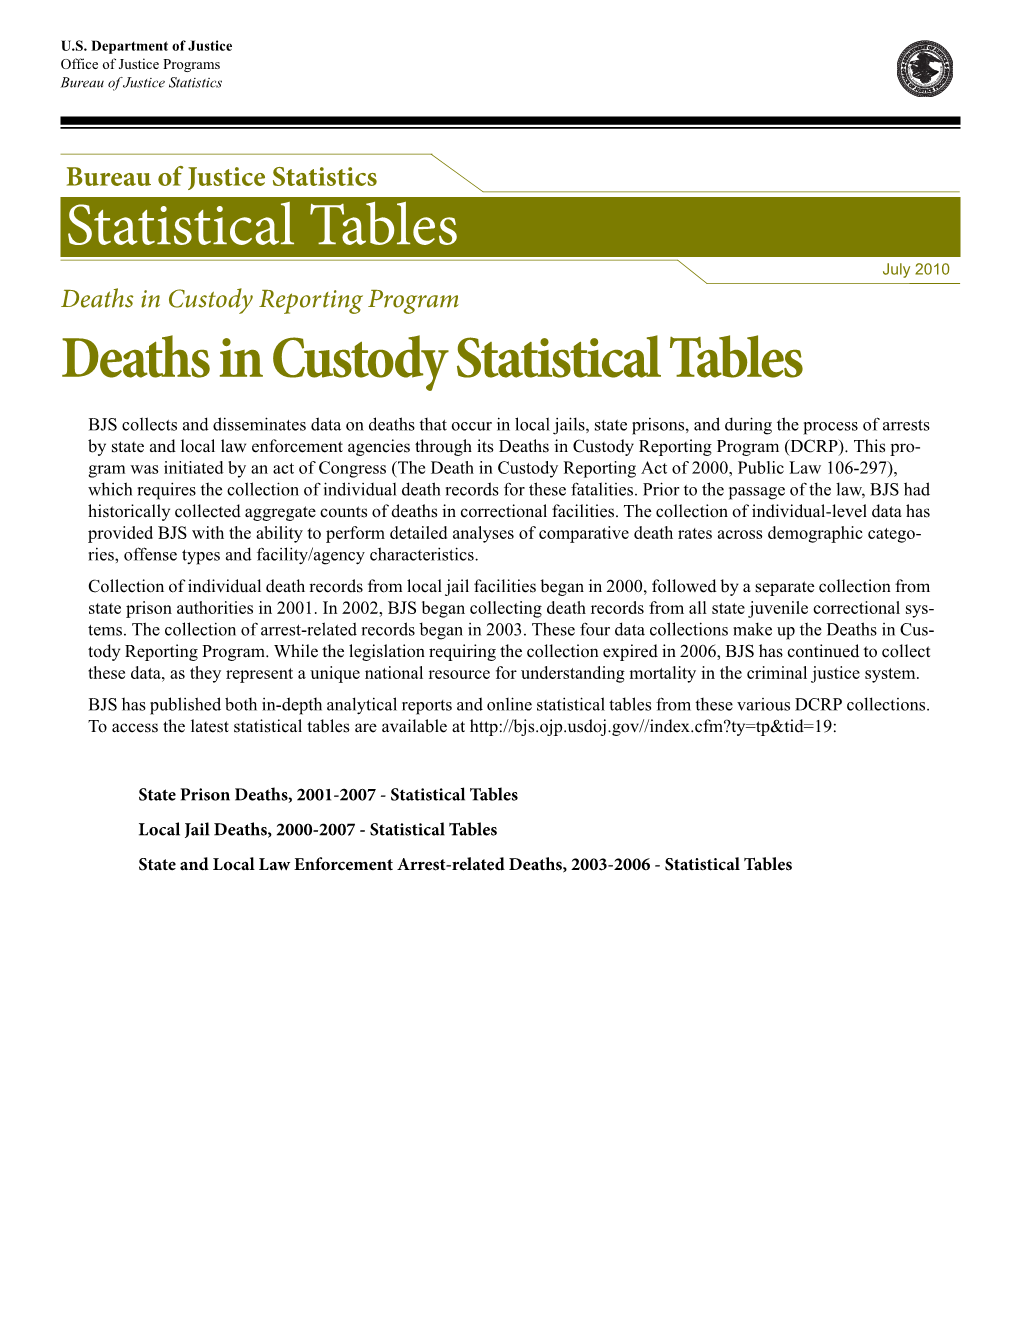 Deaths in Custody Statistical Tables